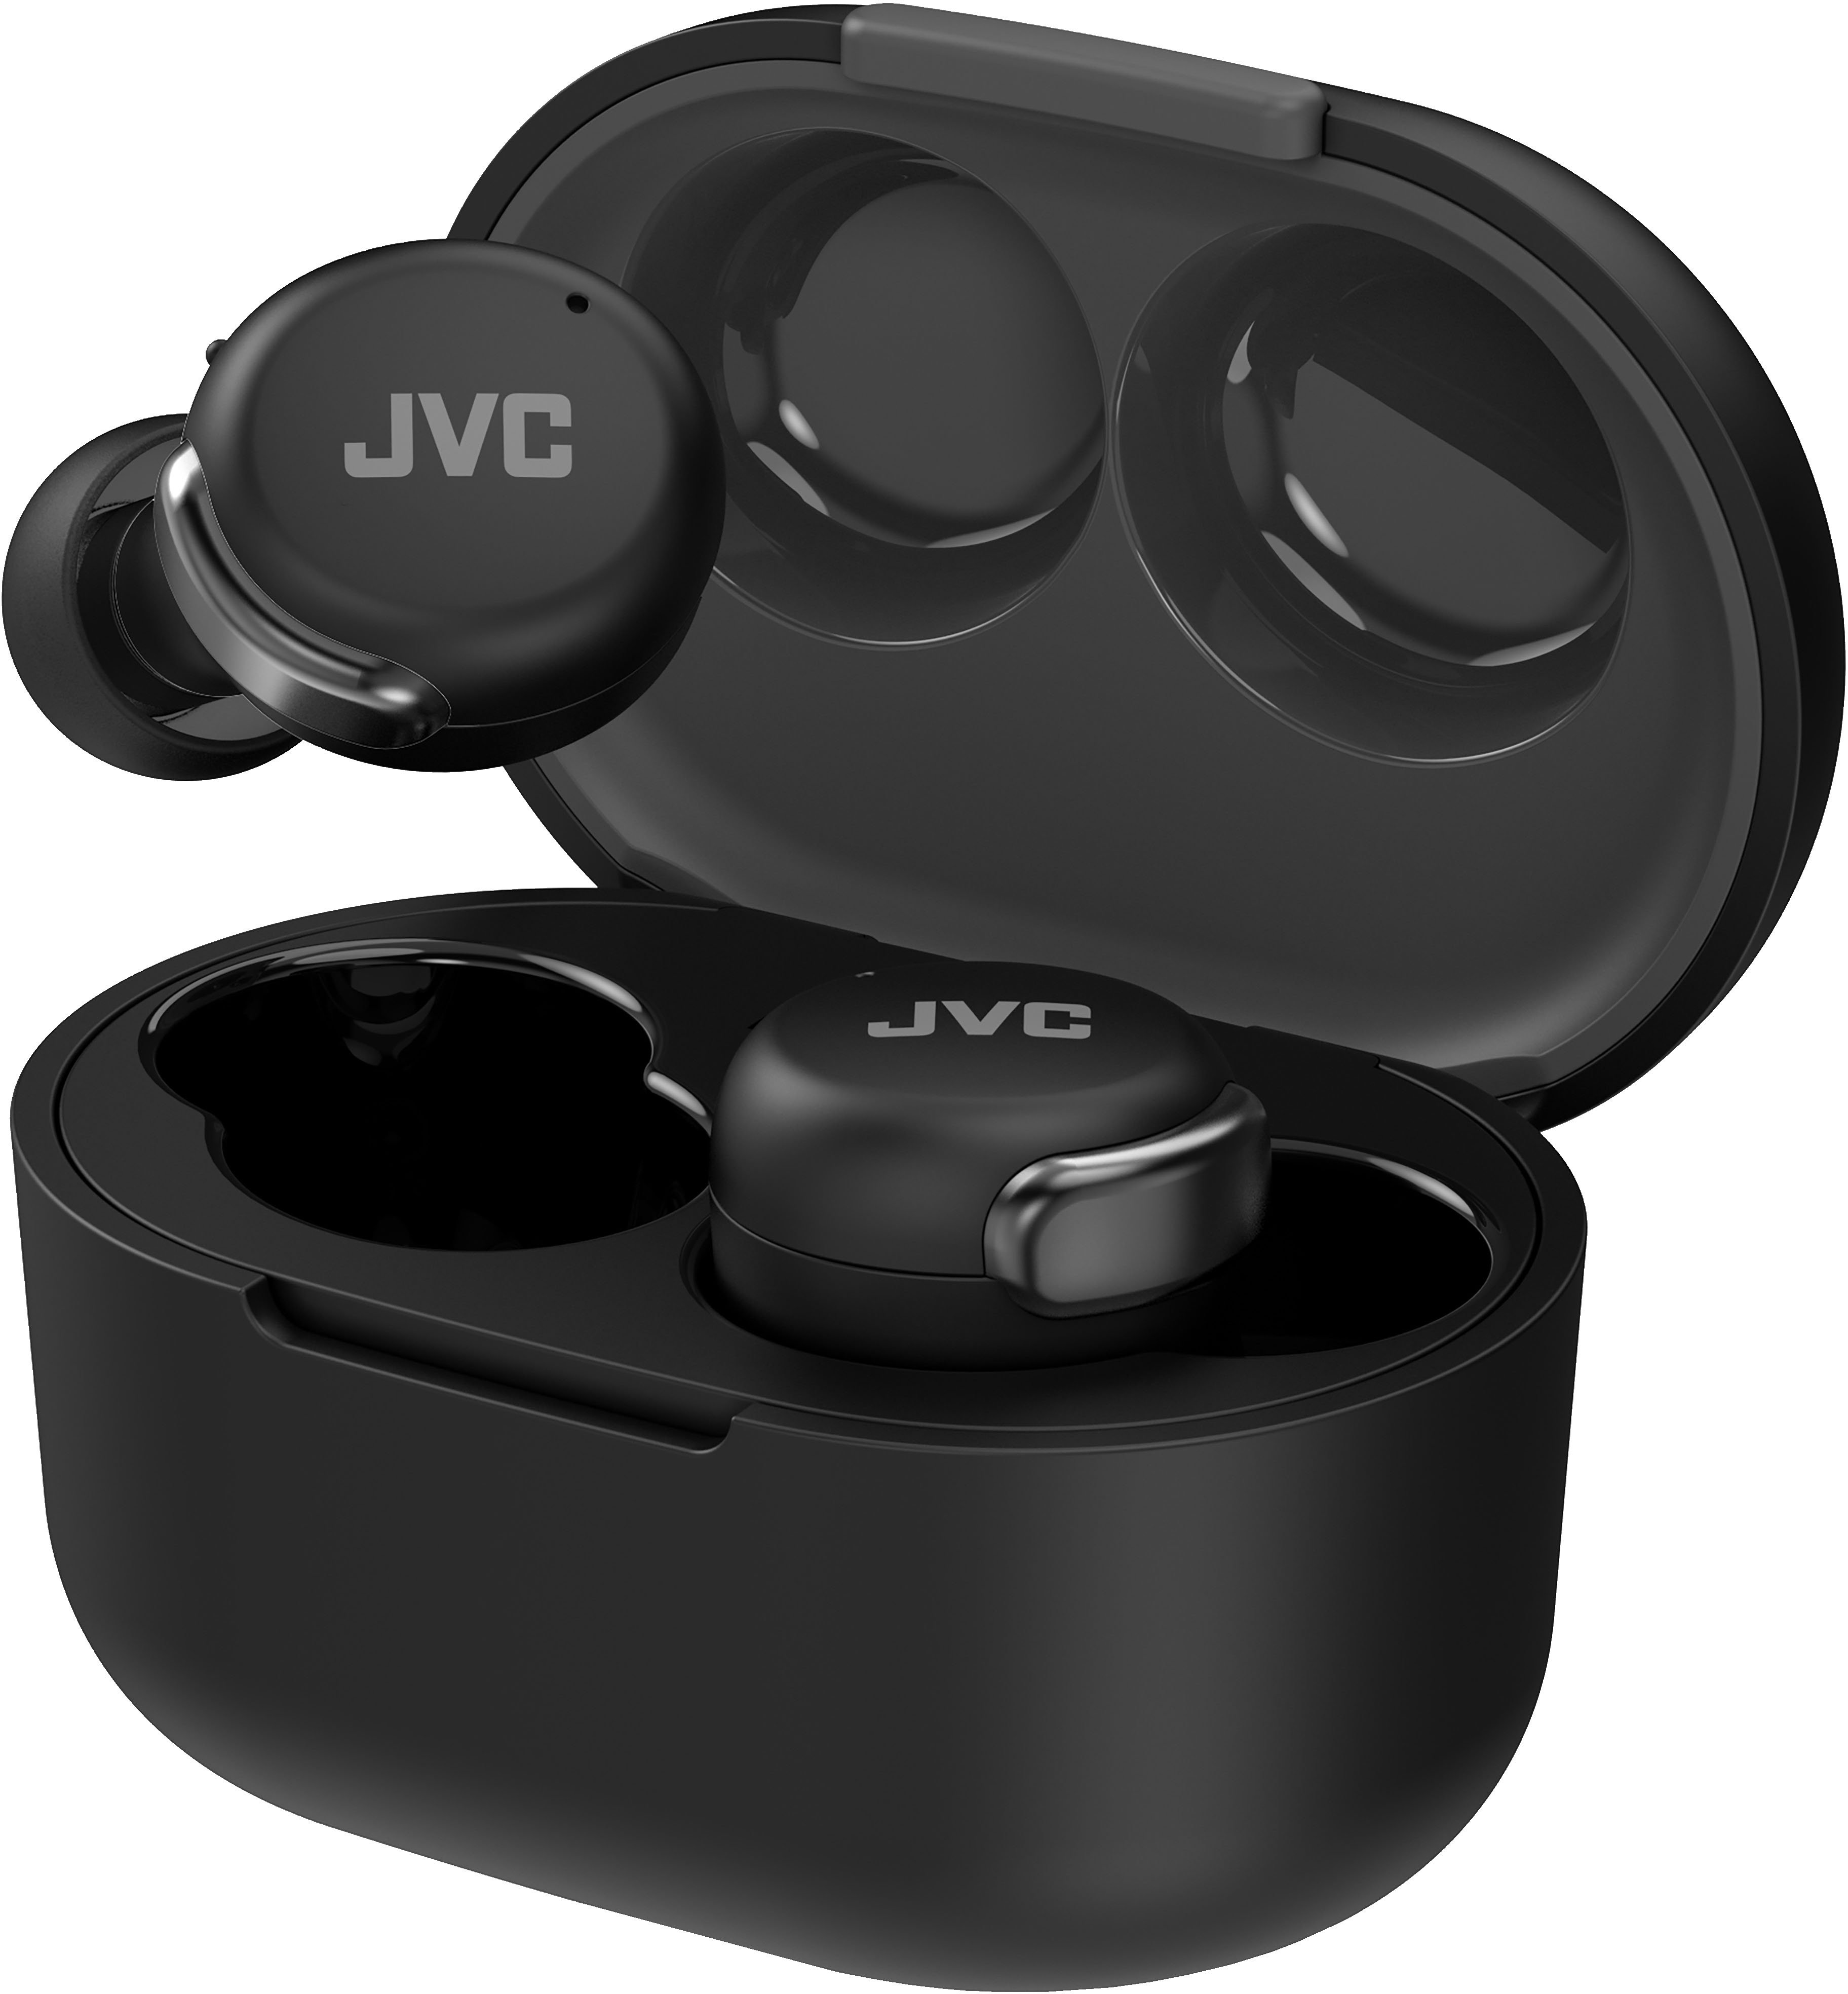 Auriculares Truewireless Bluetooth Jvc Ha-a3t-b-u - Negro - Truewireless  22h Bat Sensor Táctil